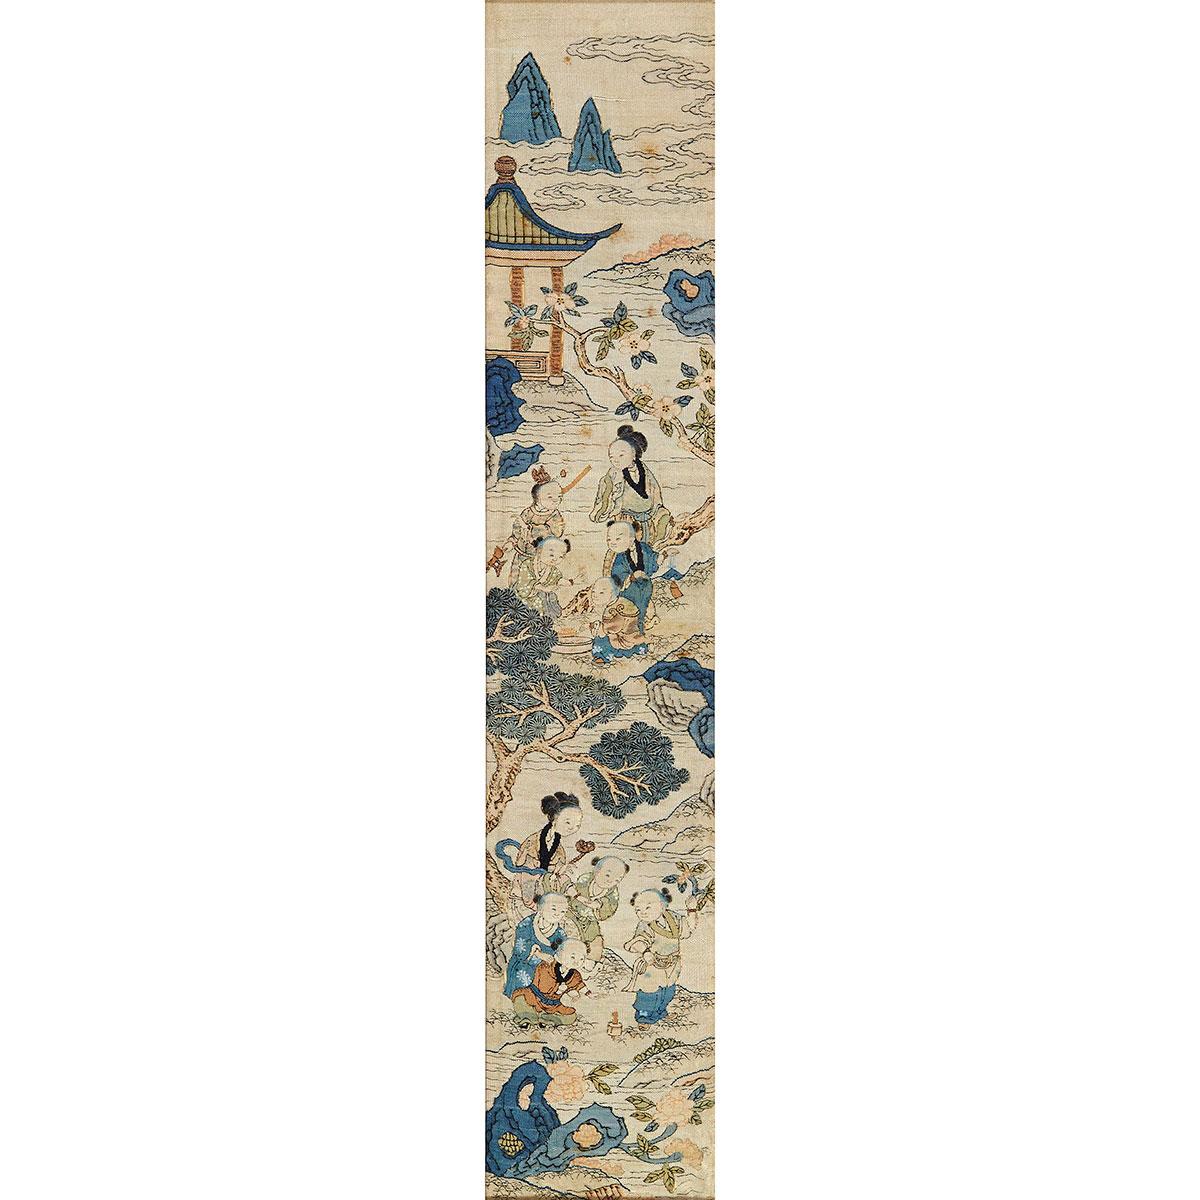 Silk Kesi Textile Panel, 18th/19th Century